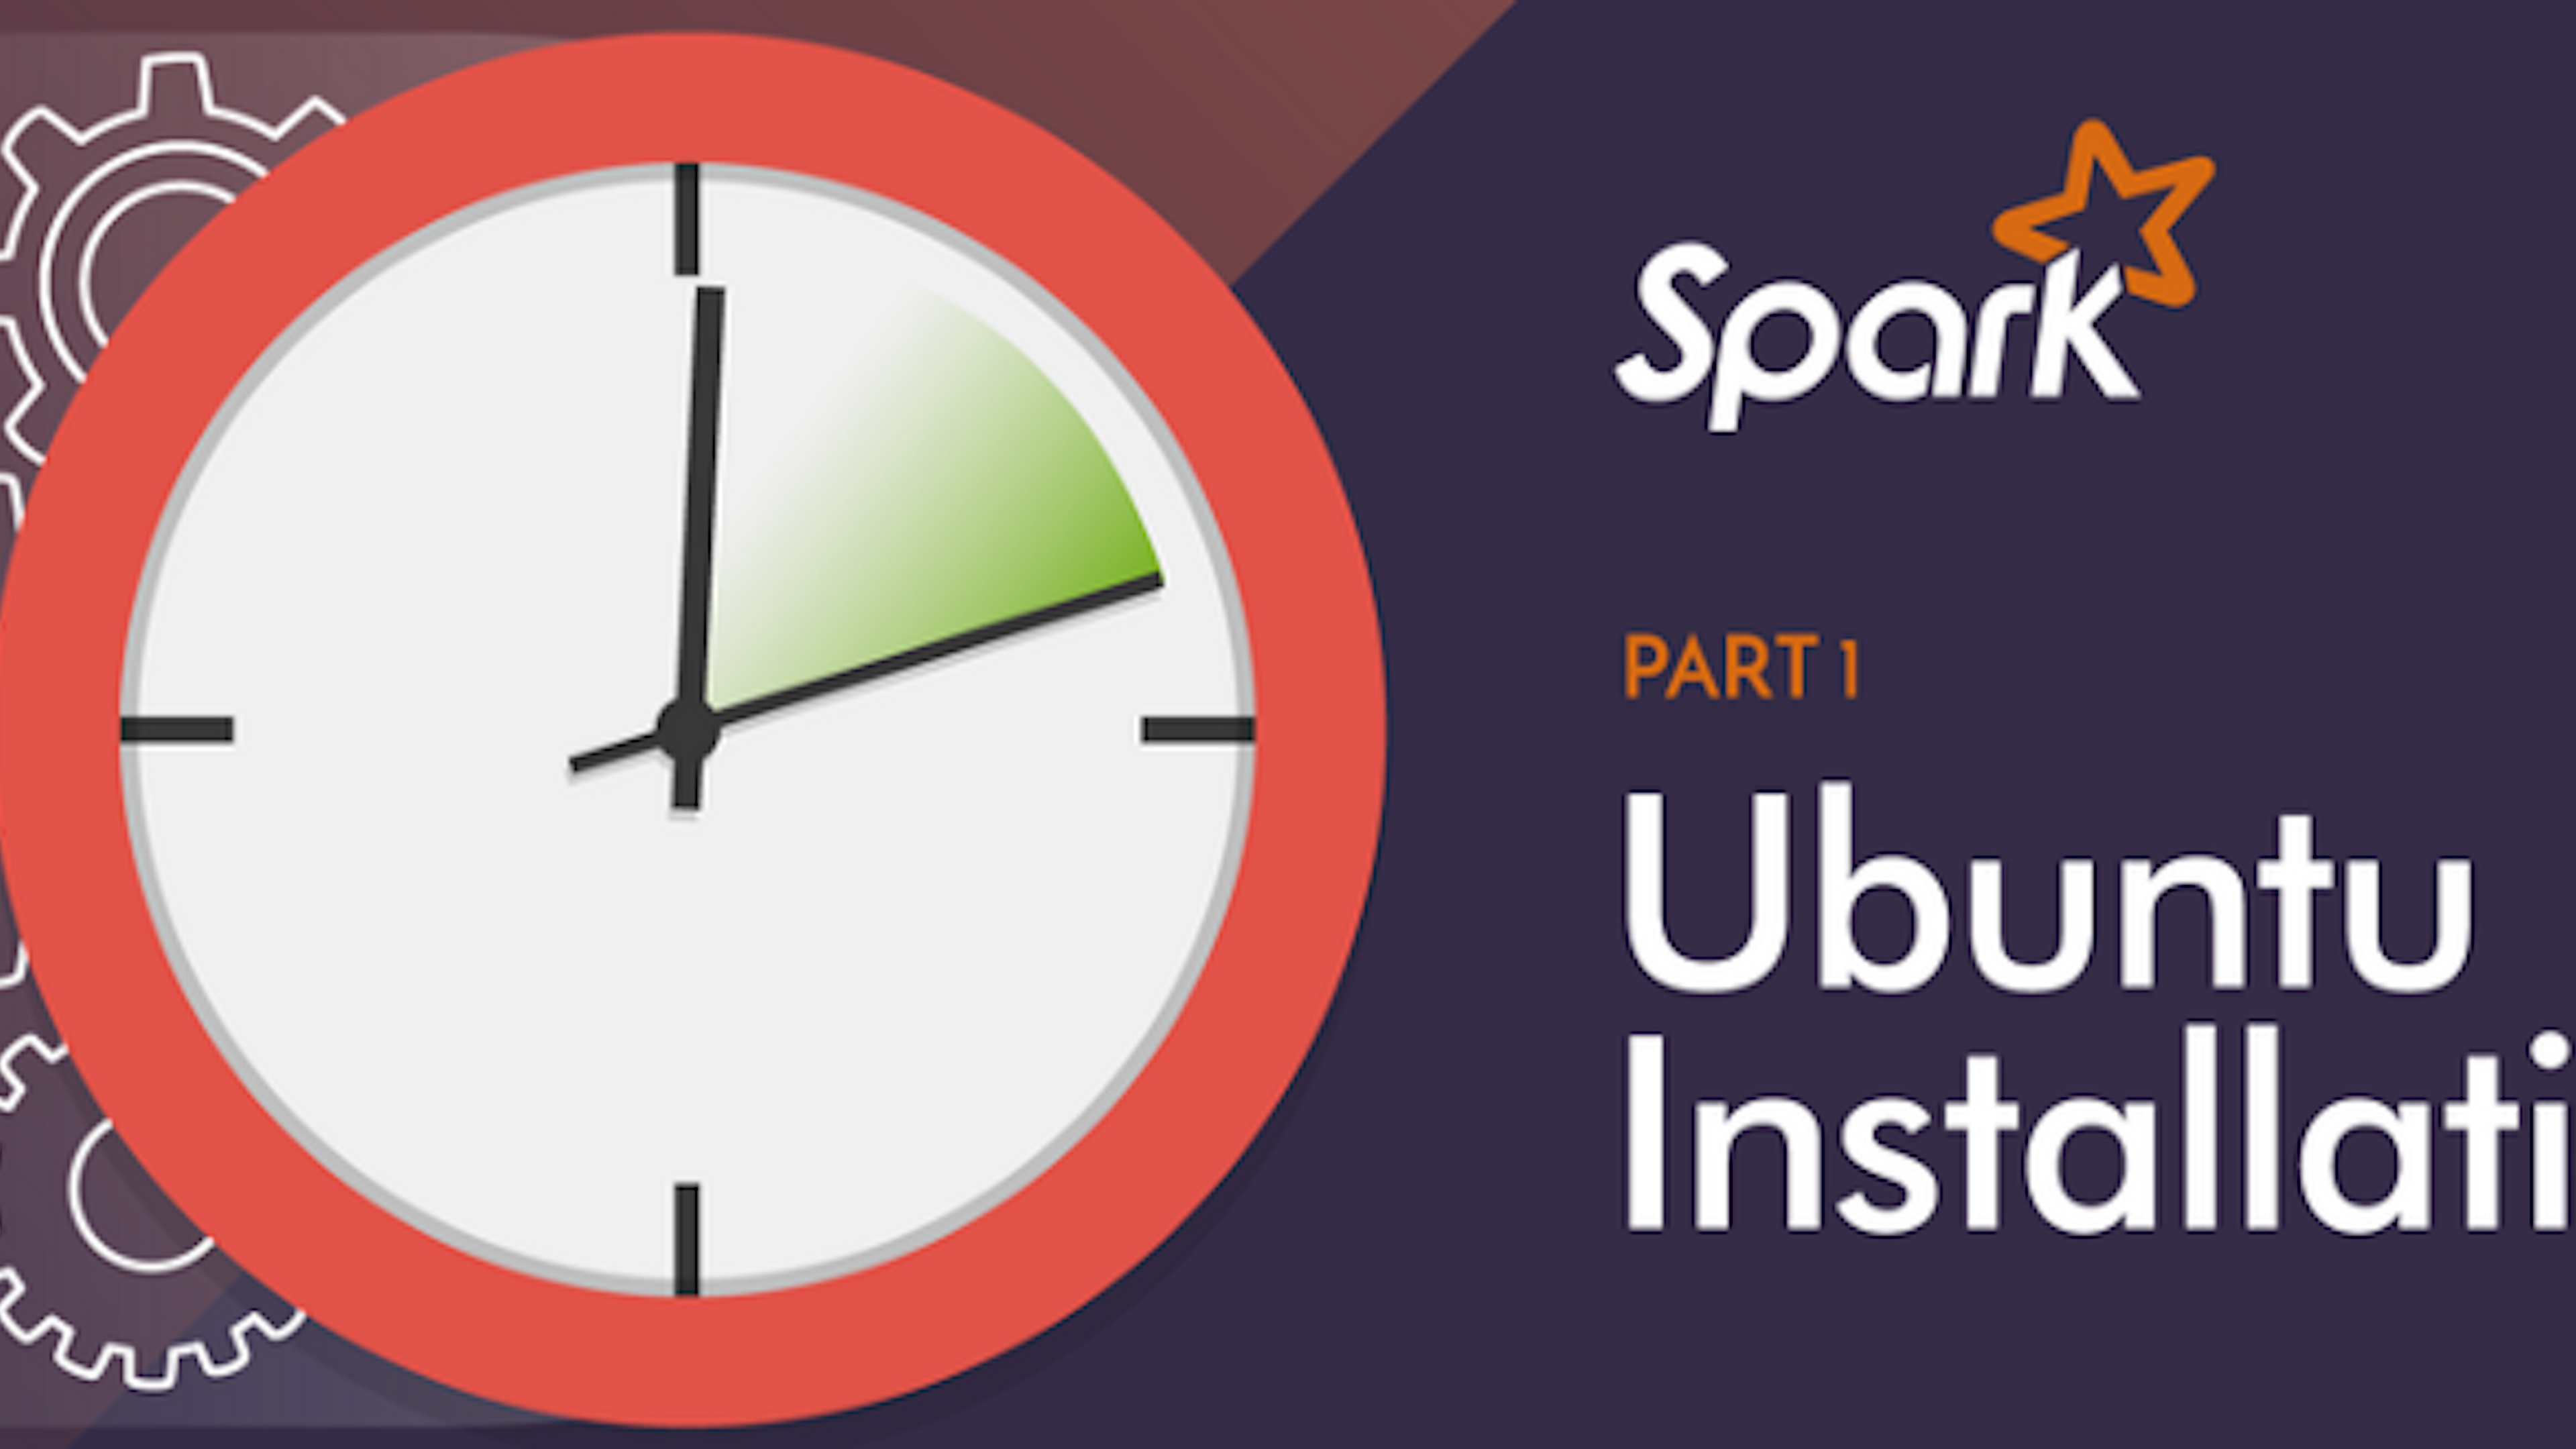 Practical Apache Spark in 10 minutes. Part 1 — Ubuntu installation